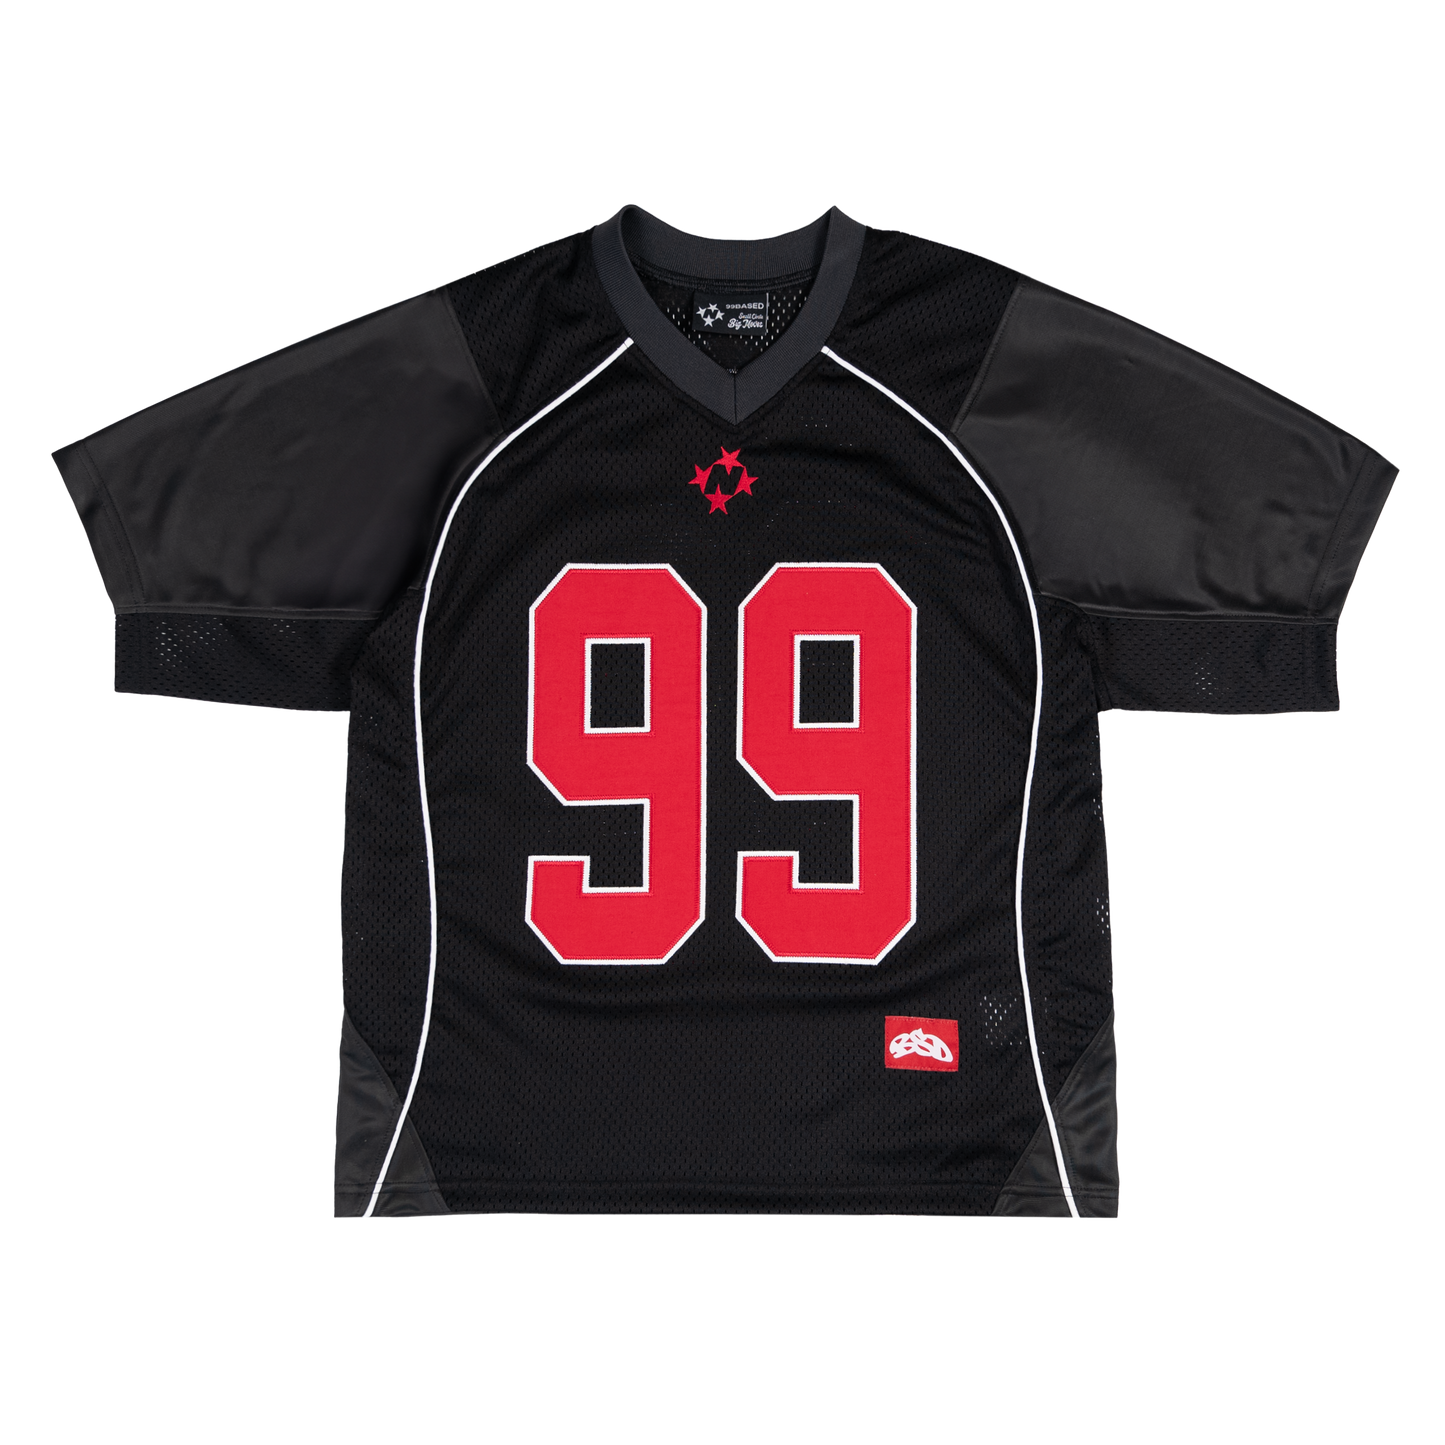 99 Football Jersey [Black]